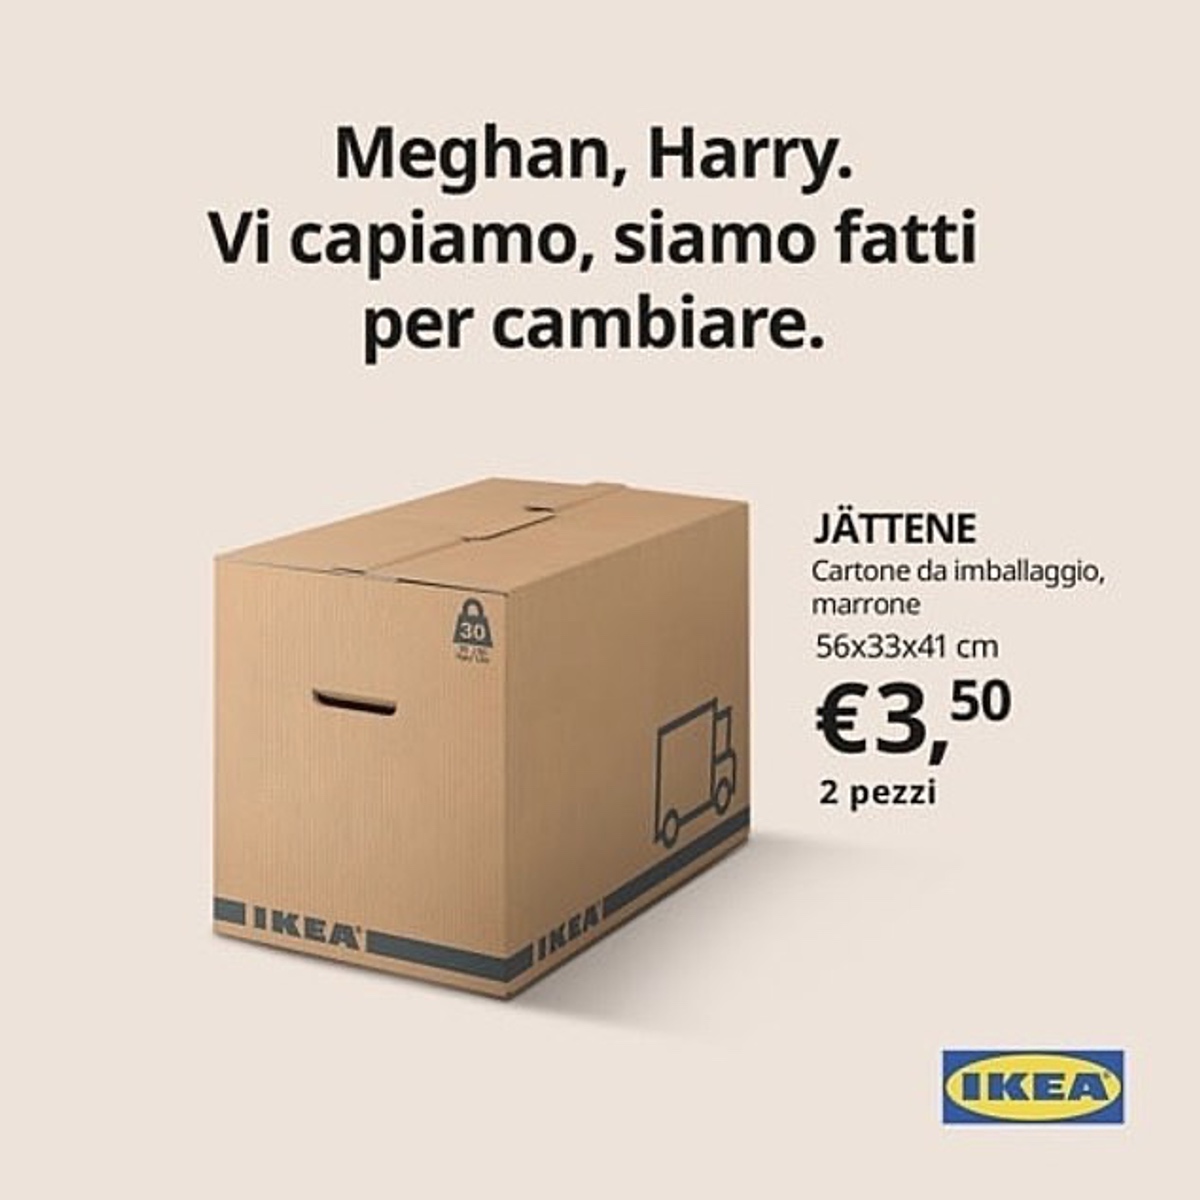 IKEA σε Χάρι και Μέγκαν: Σας καταλαβαίνουμε! Είμαστε φτιαγμένοι για να αλλάζουμε